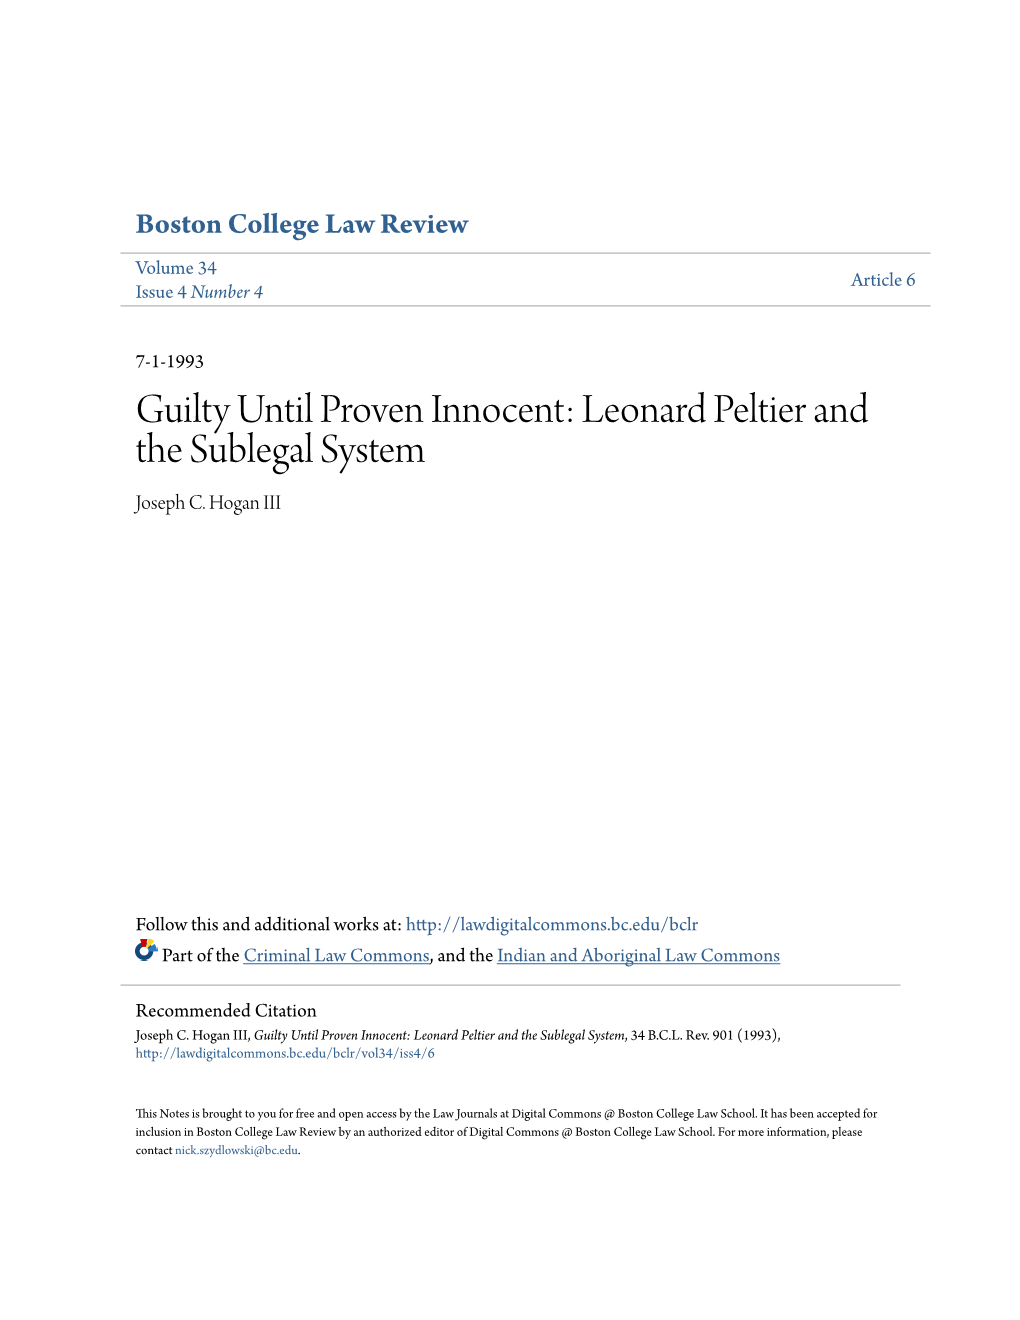 Guilty Until Proven Innocent: Leonard Peltier and the Sublegal System Joseph C